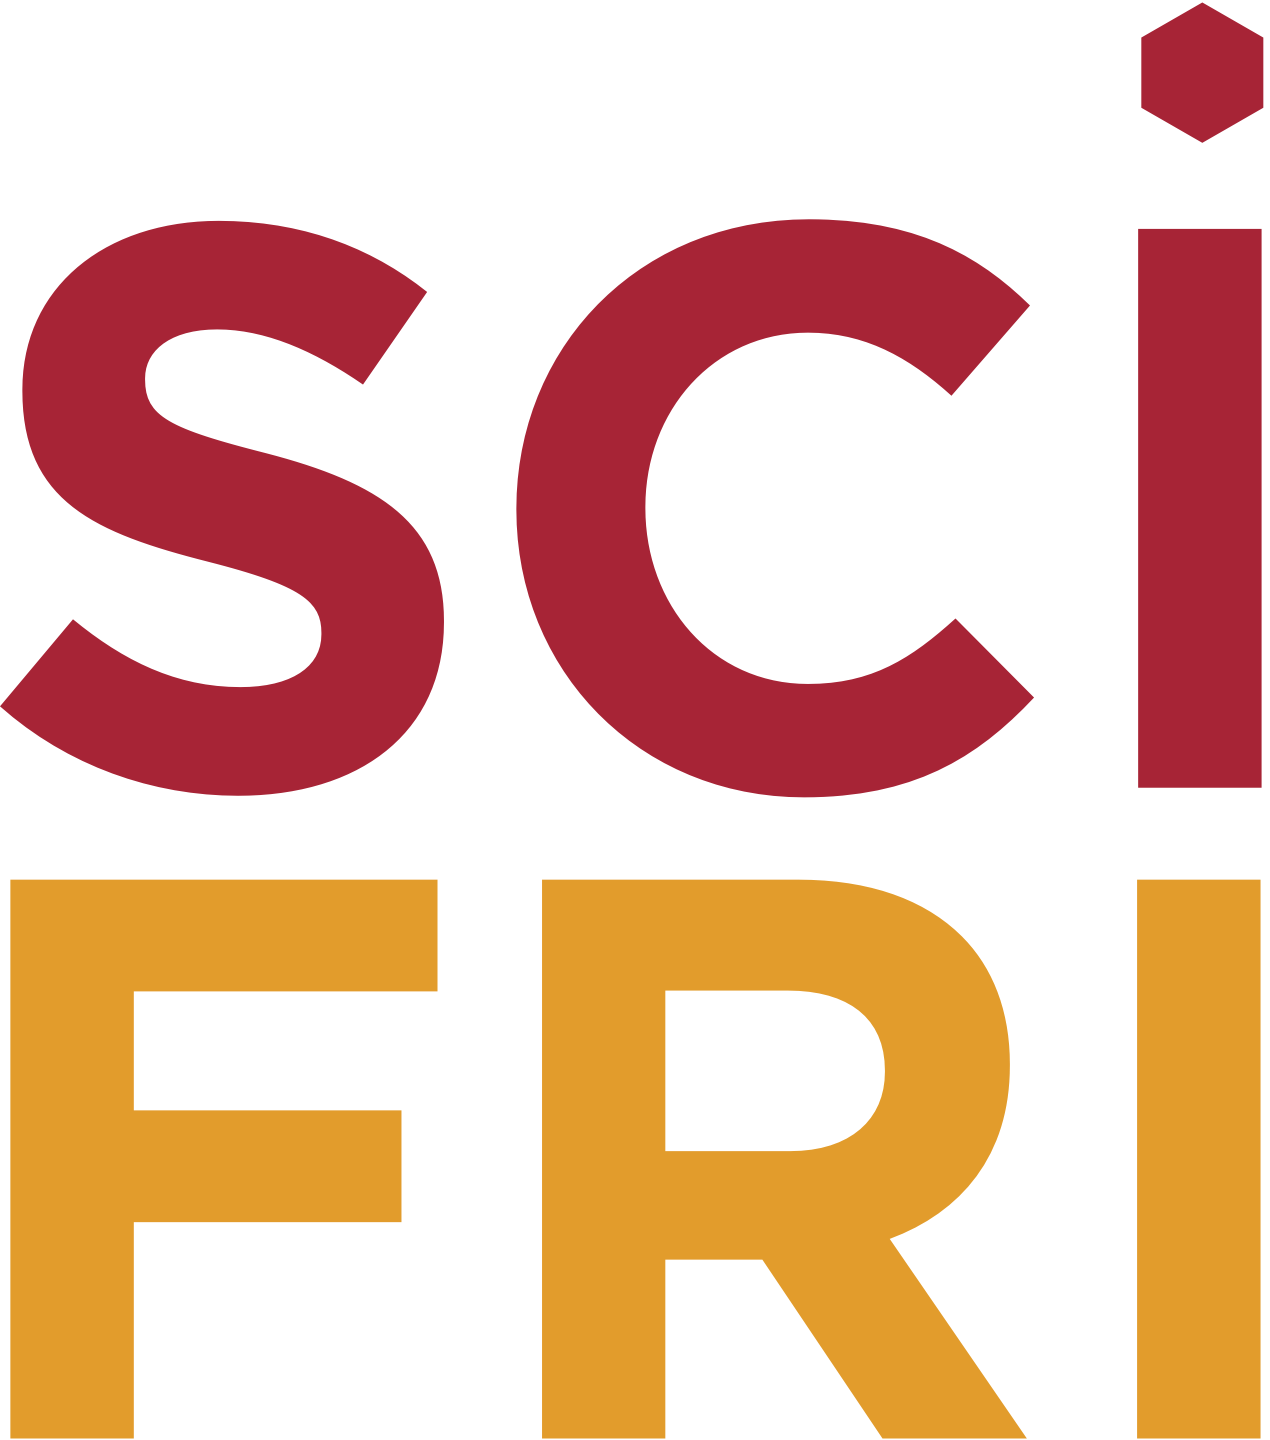 logo that says "scifri"